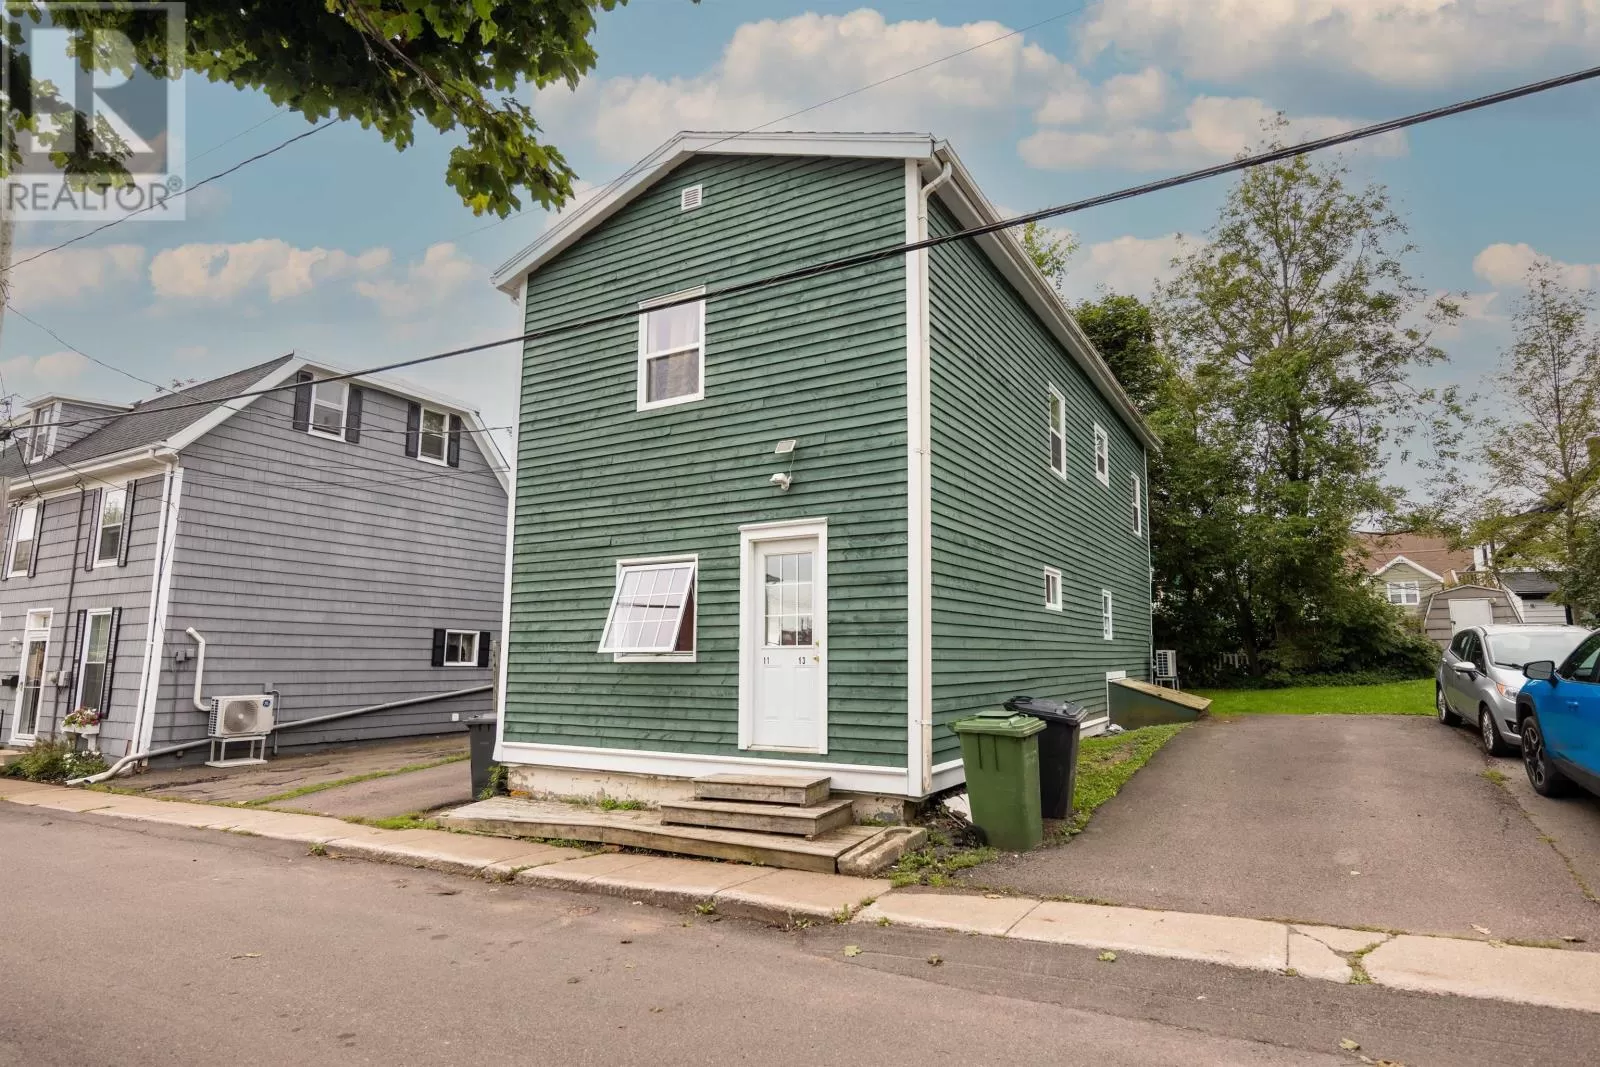 Duplex for rent: 11-13 Orlebar Street, Charlottetown, Prince Edward Island C1A 4X5